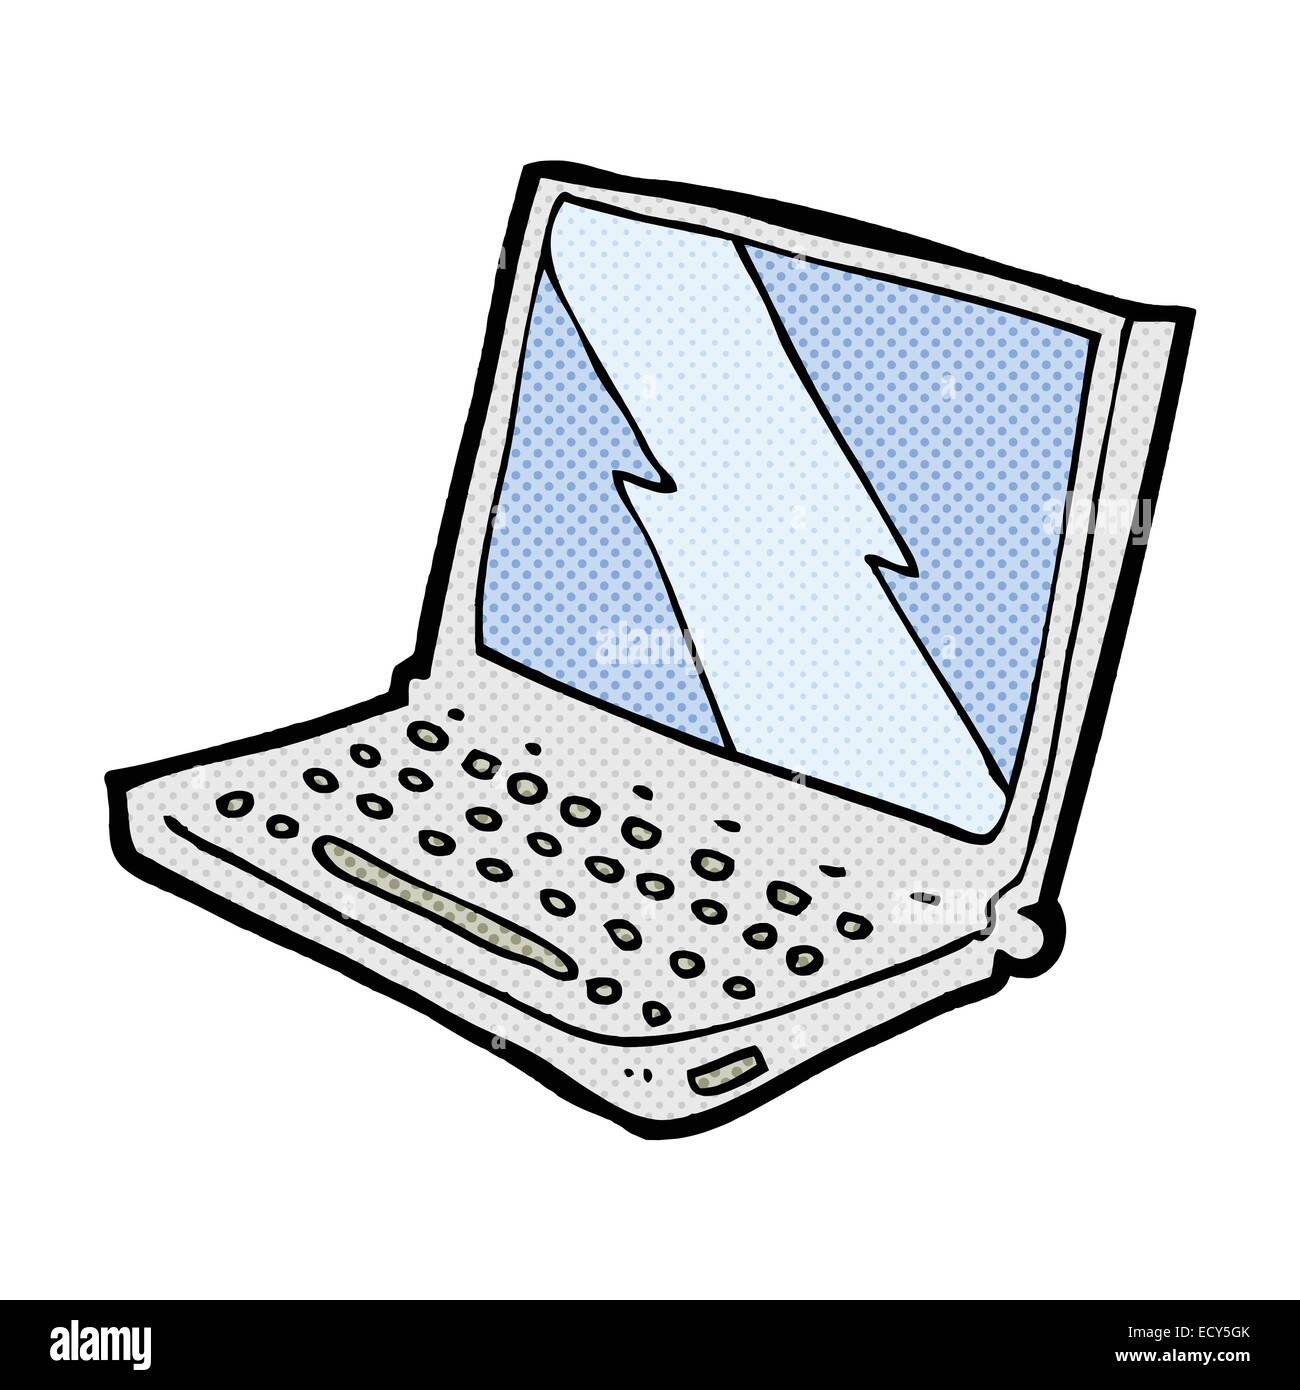 Retro Comic Buch Style Cartoon Laptop-computer Stock-Vektorgrafik - Alamy